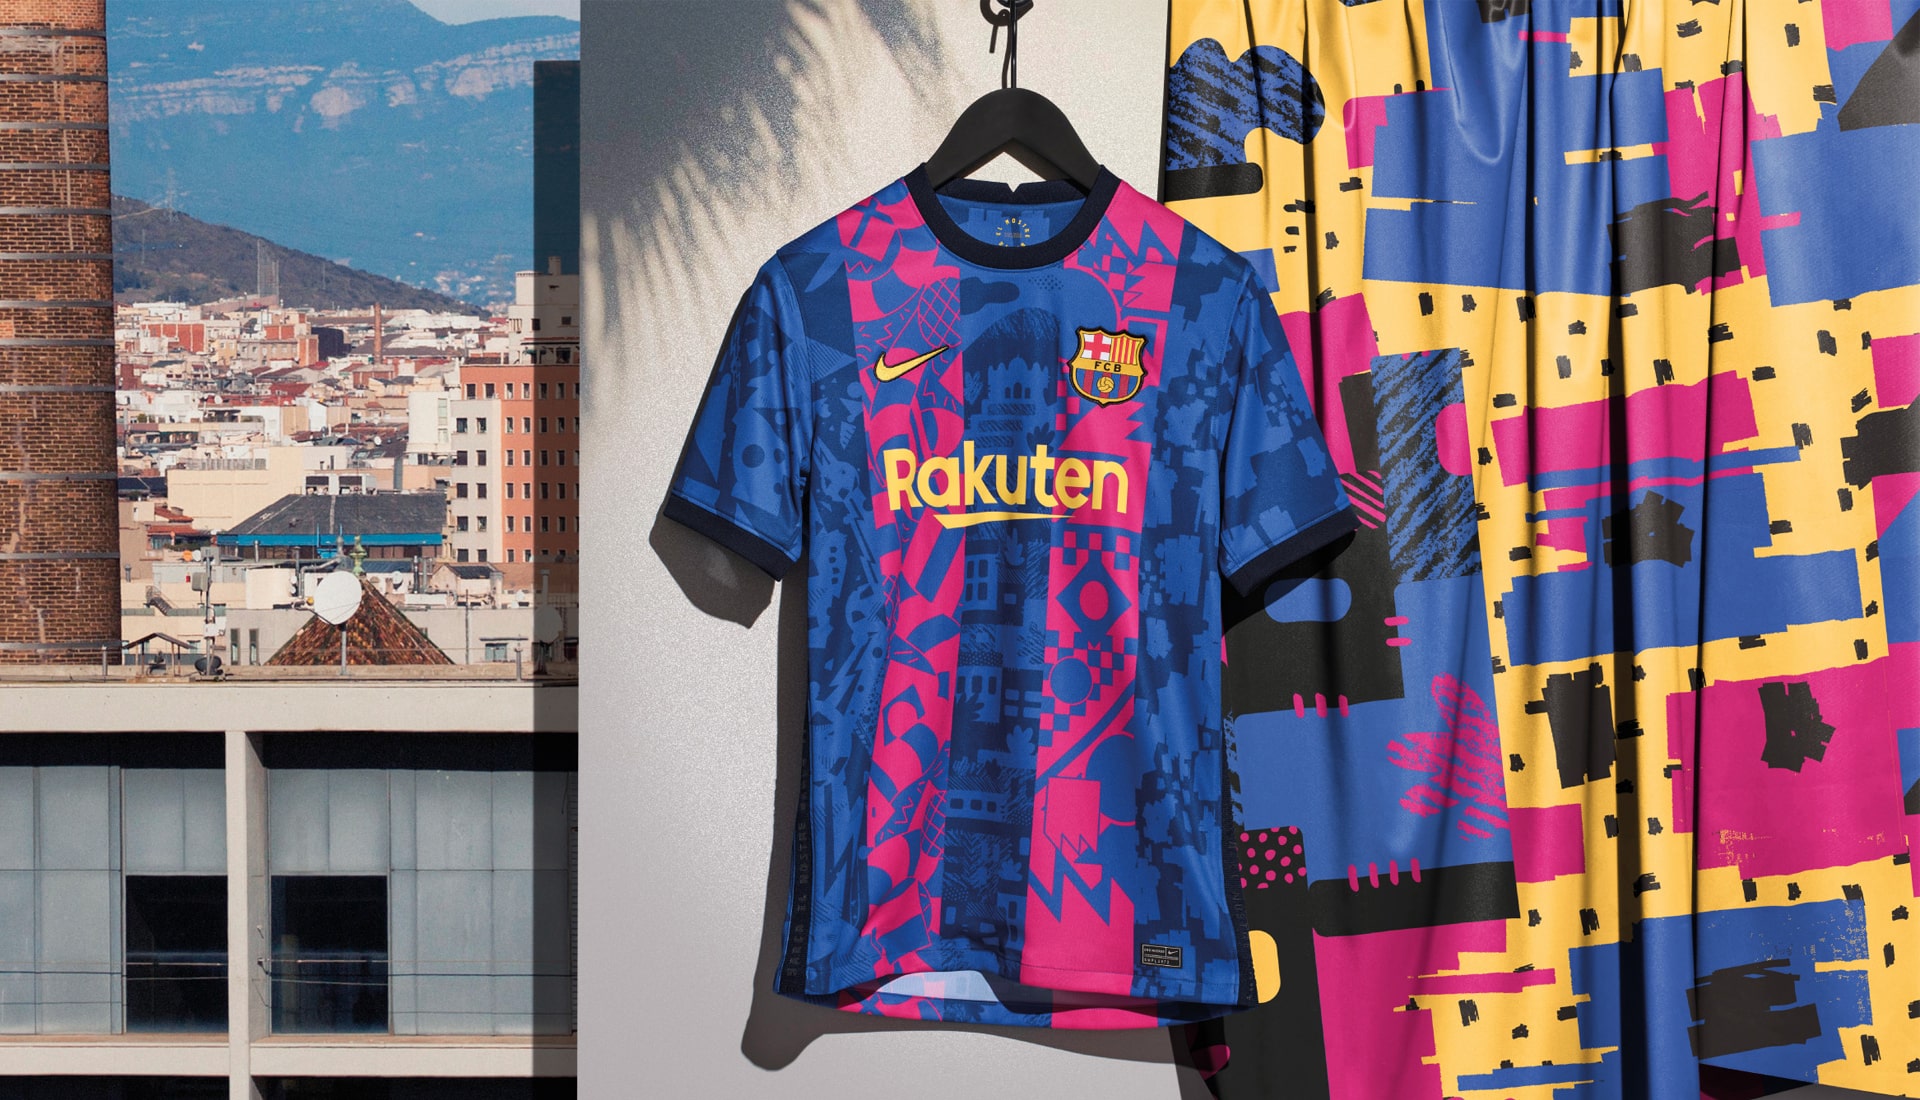 FC Barcelona Third Kit 21/22